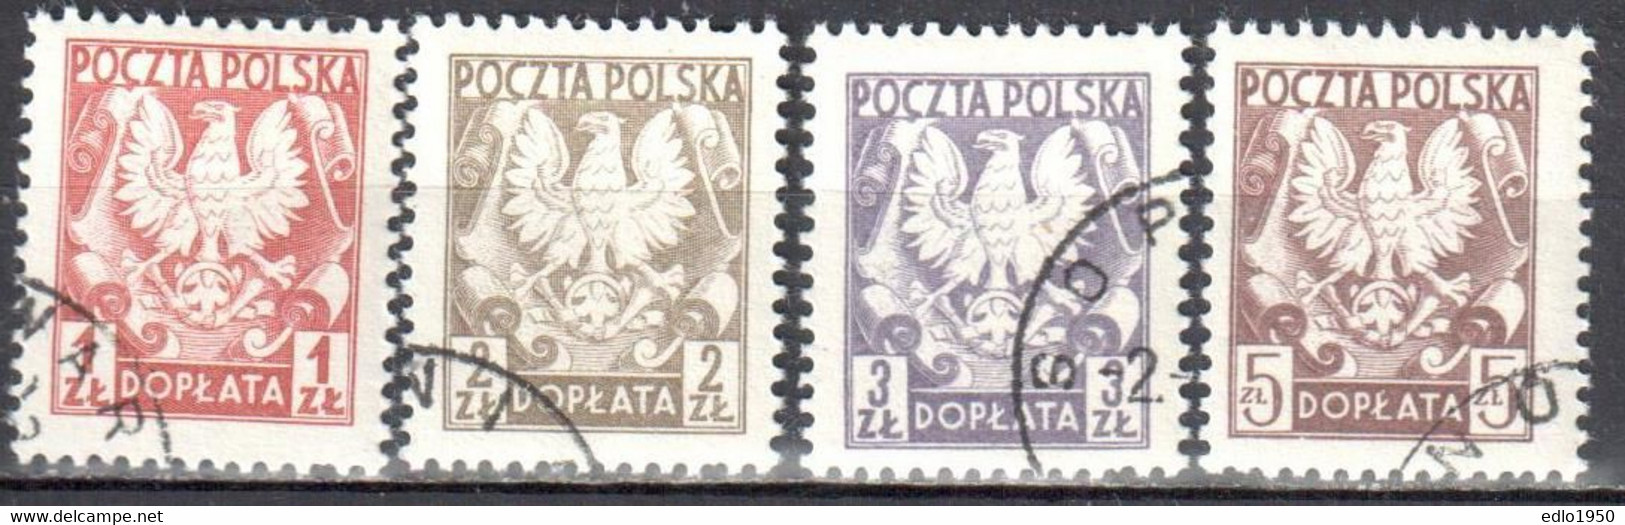 Poland 1980 - Postage Due - Mi.165-68 - Used - Postage Due